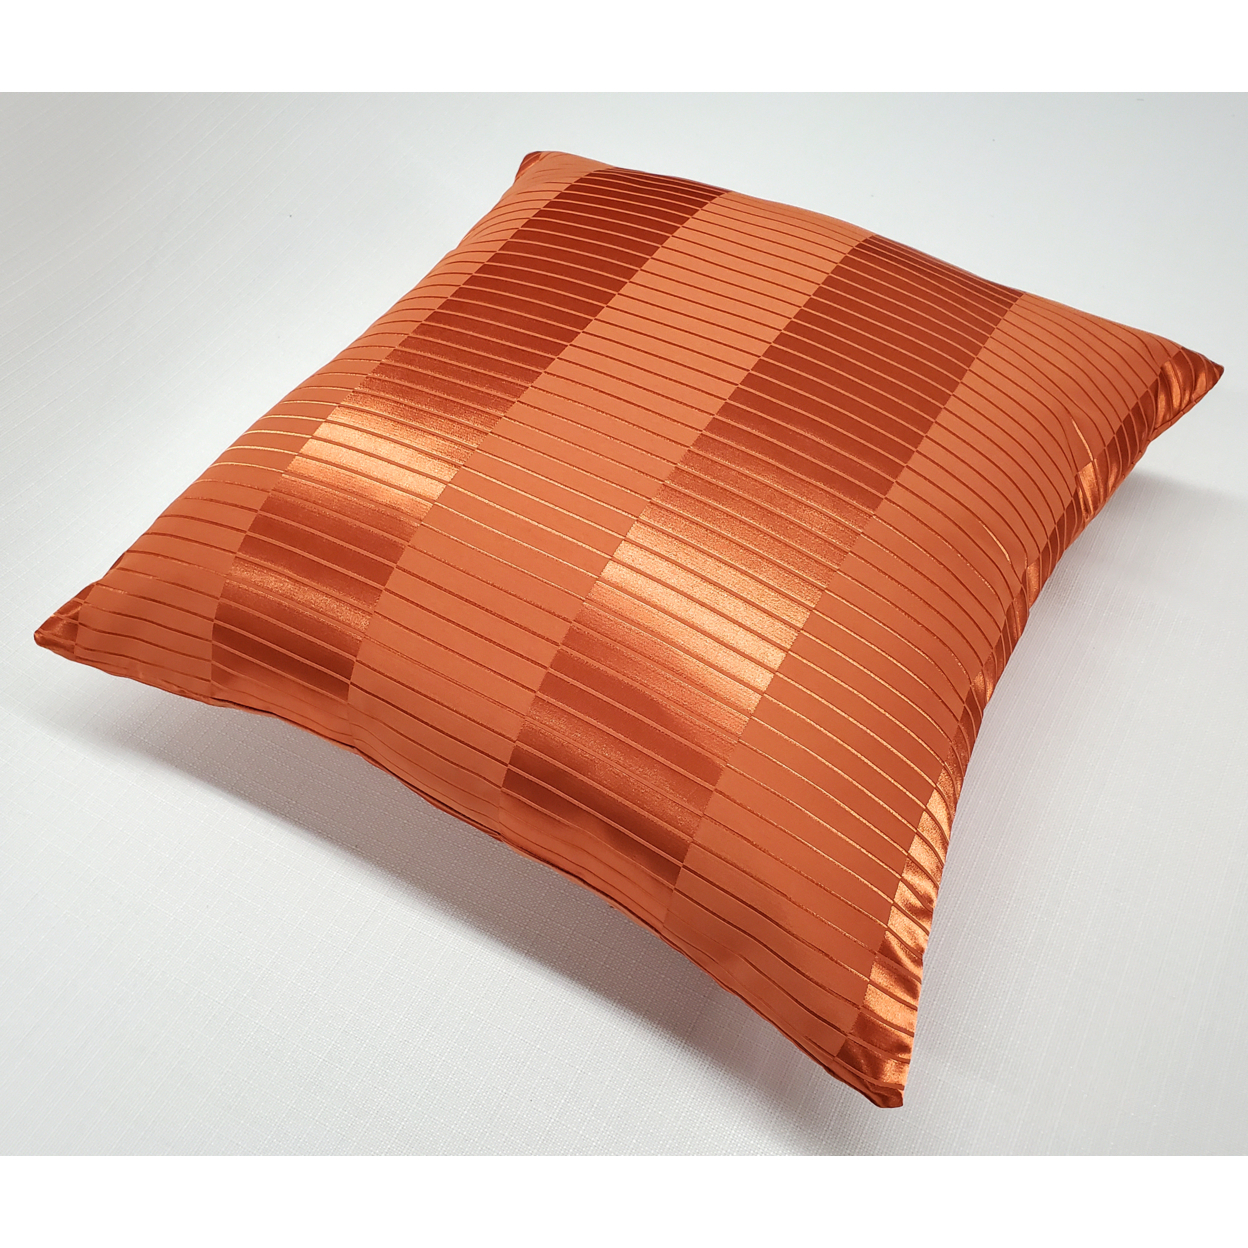 Pinctada Pearl Burnt Orange Throw Pillow 19x19, With Polyfill Insert